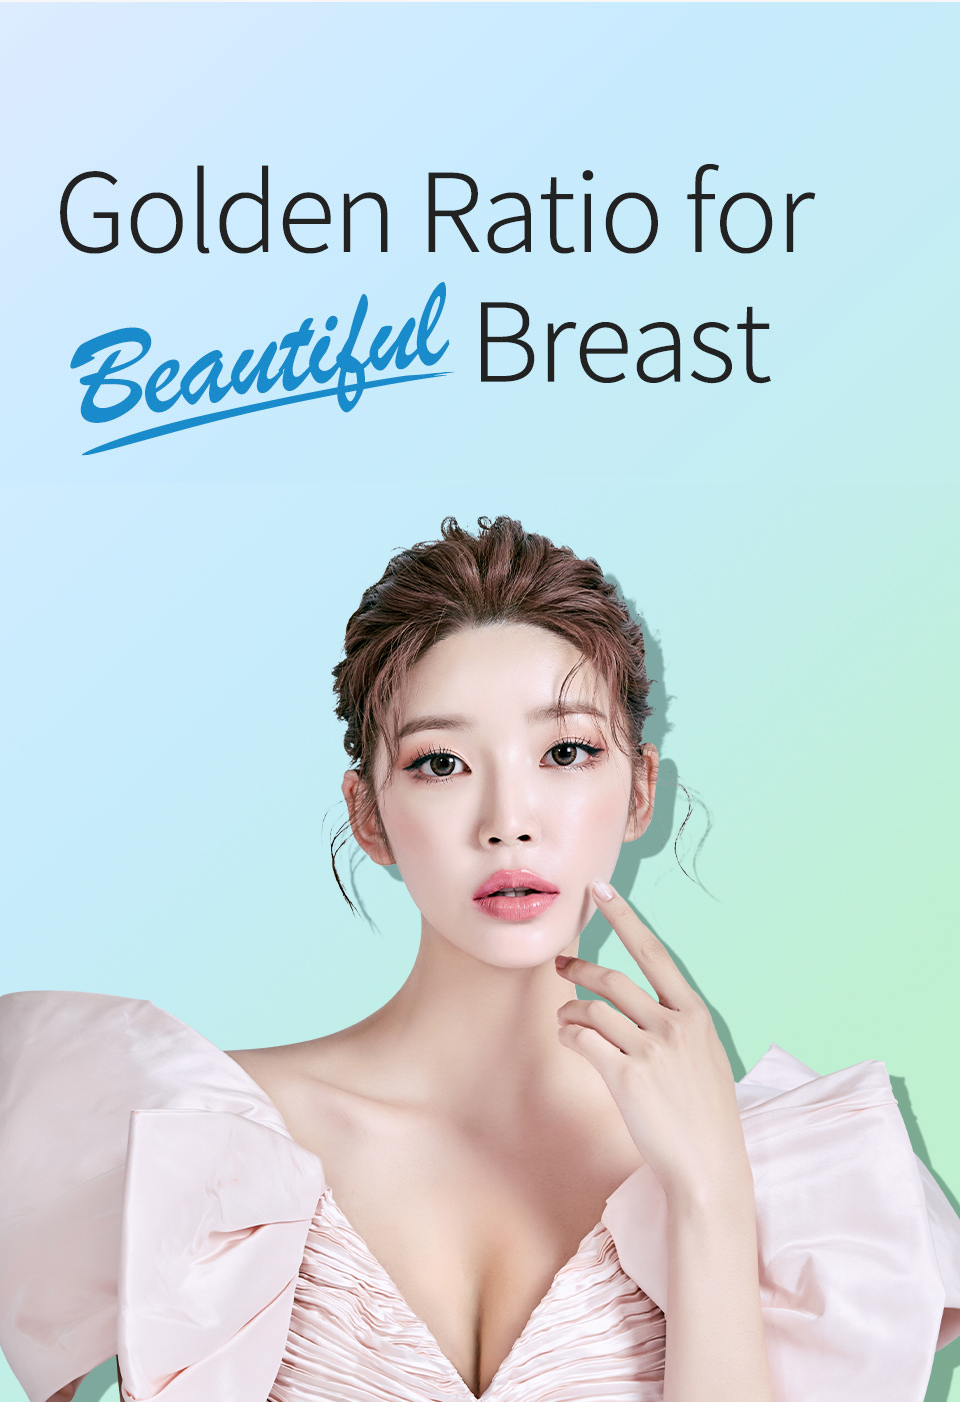 Golden Ratio for Beautiful Breast